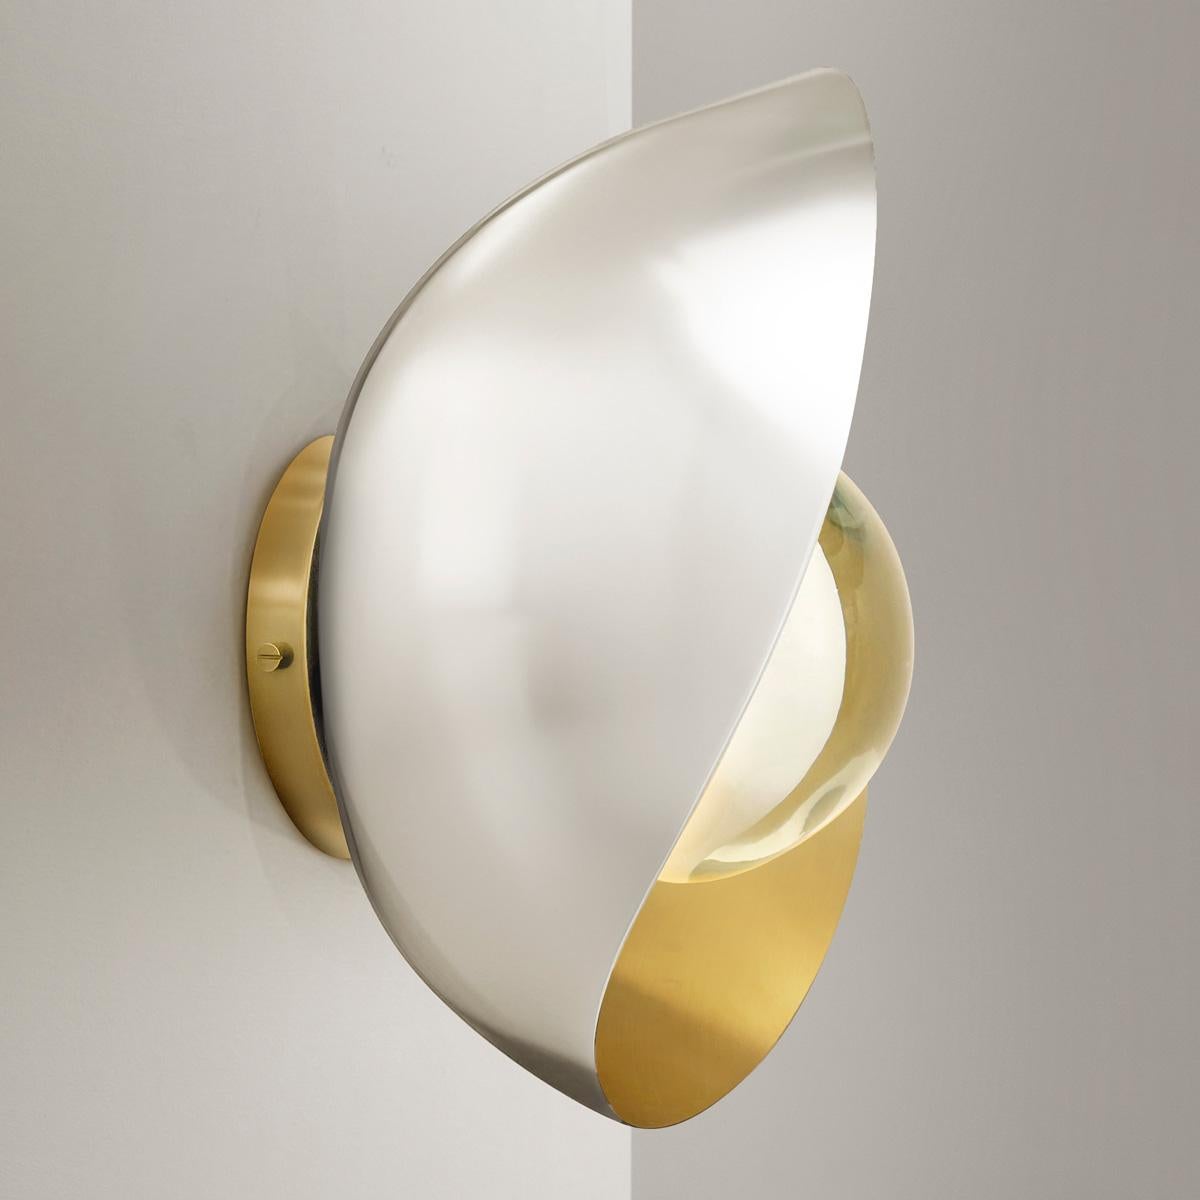 Italian Perla Wall Light by Gaspare Asaro-Satin Brass/Polished Nickel Finish For Sale